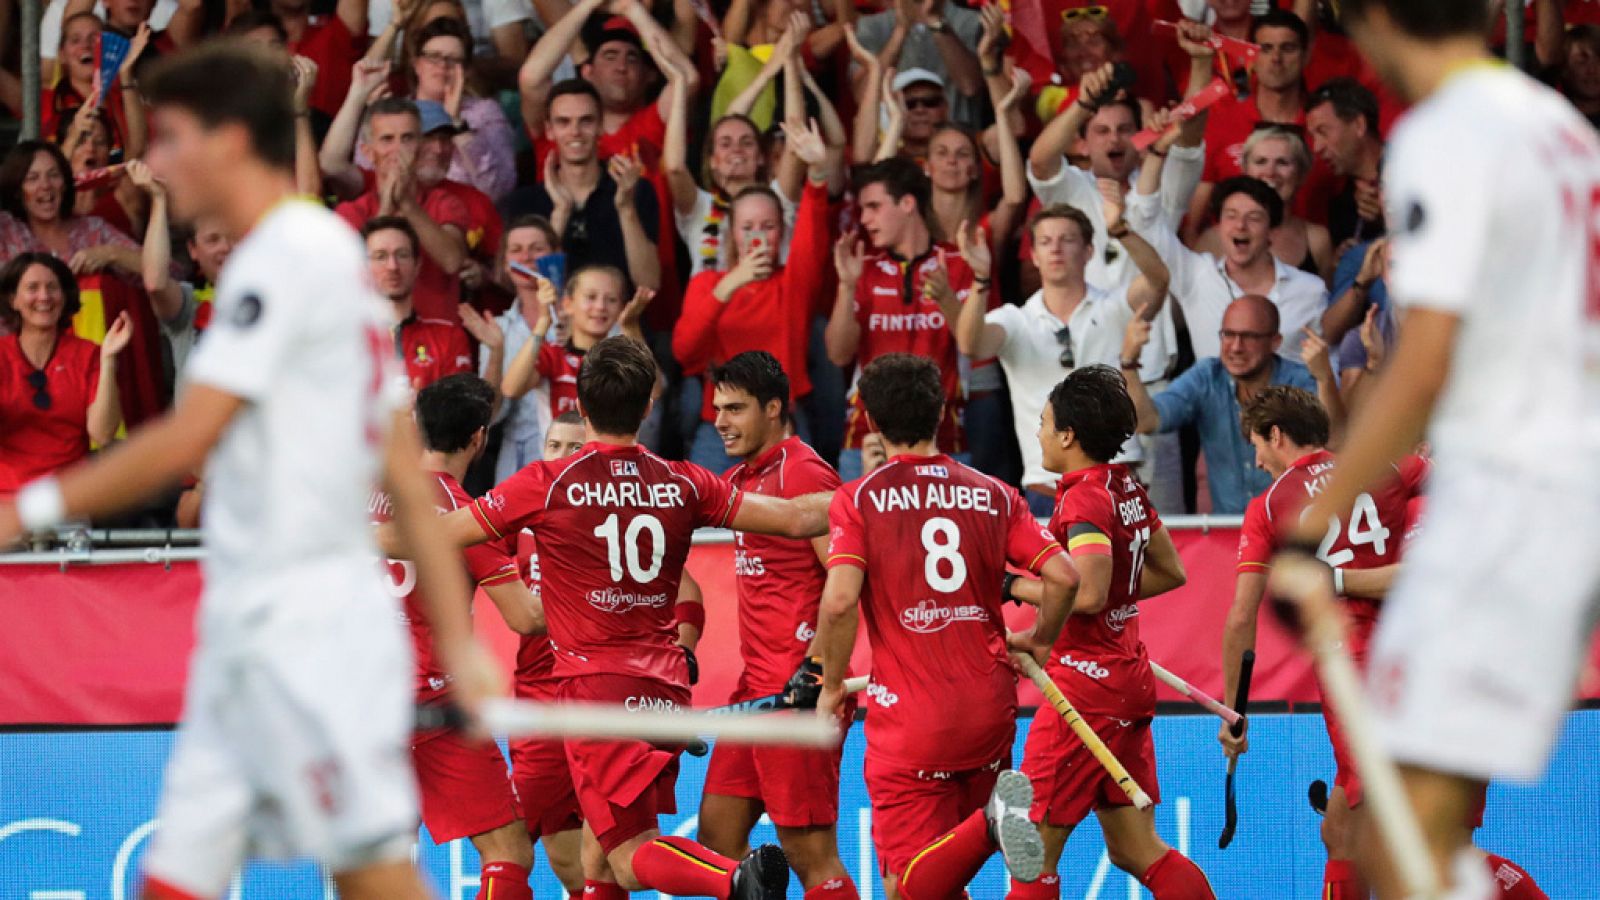 Bélgica se proclama campeona de Europa de hockey hierba tras derrotar a España